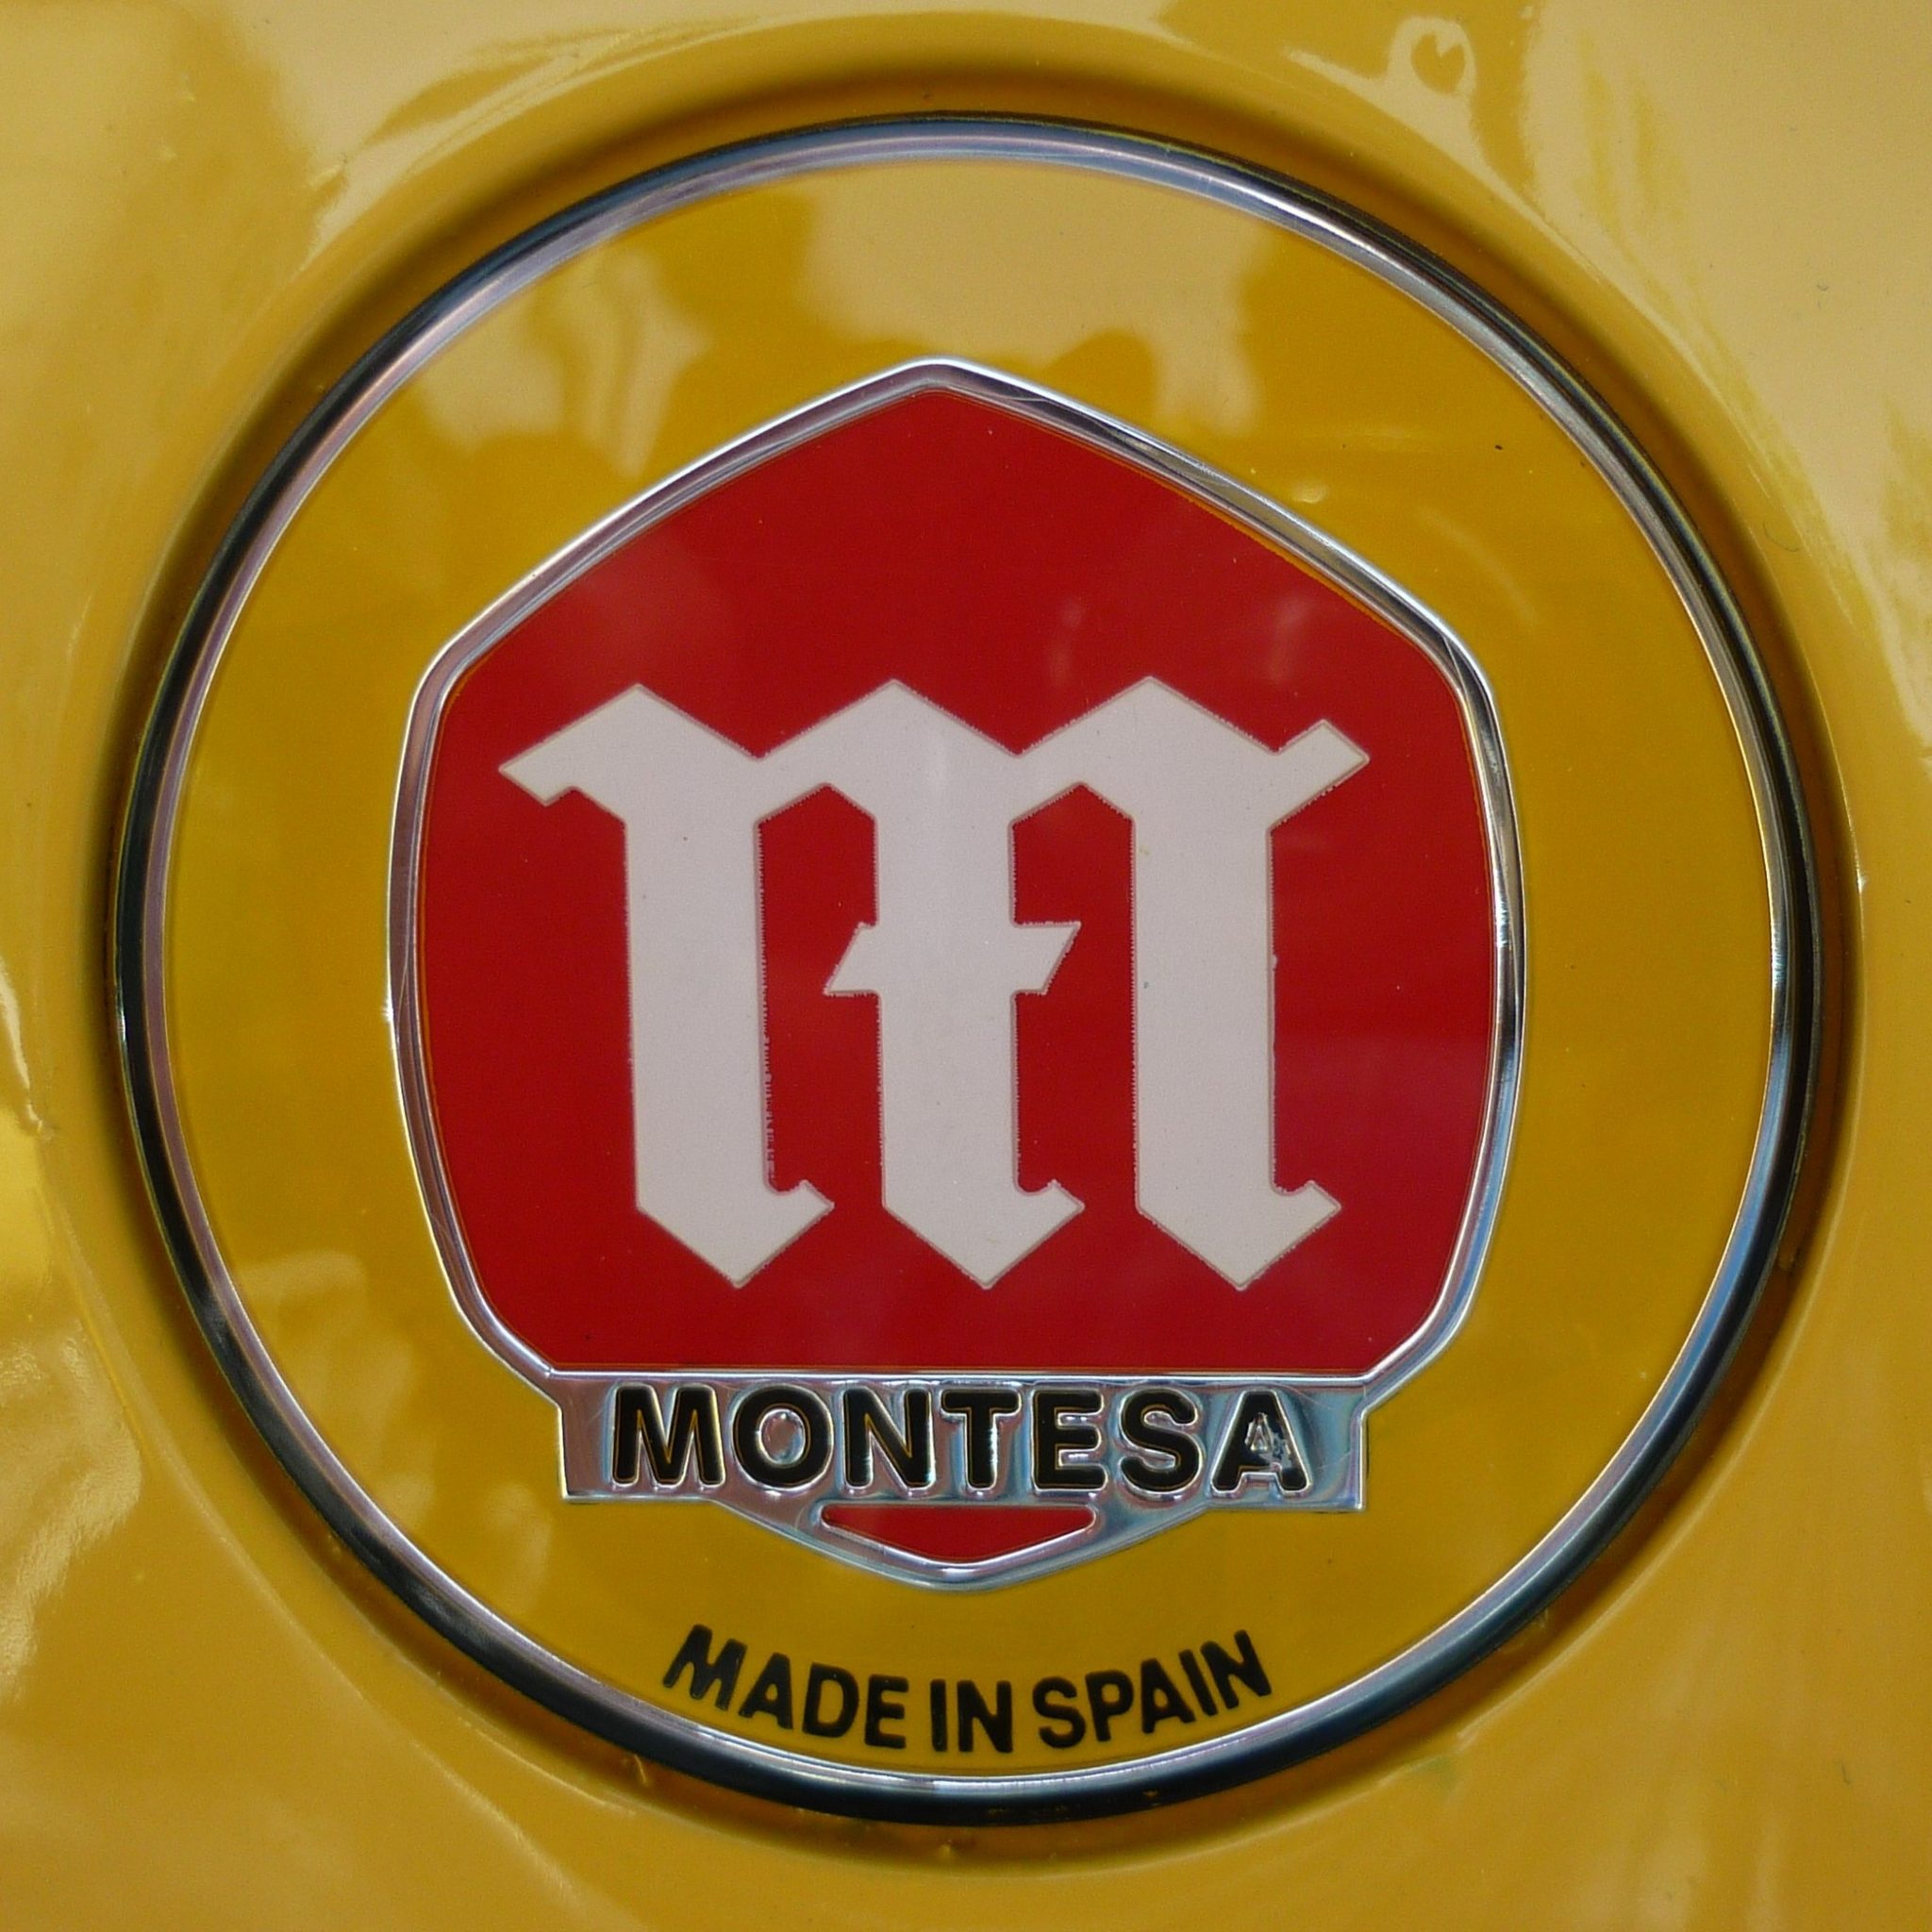 Montesa motorcycle logo history and Meaning, bike emblem